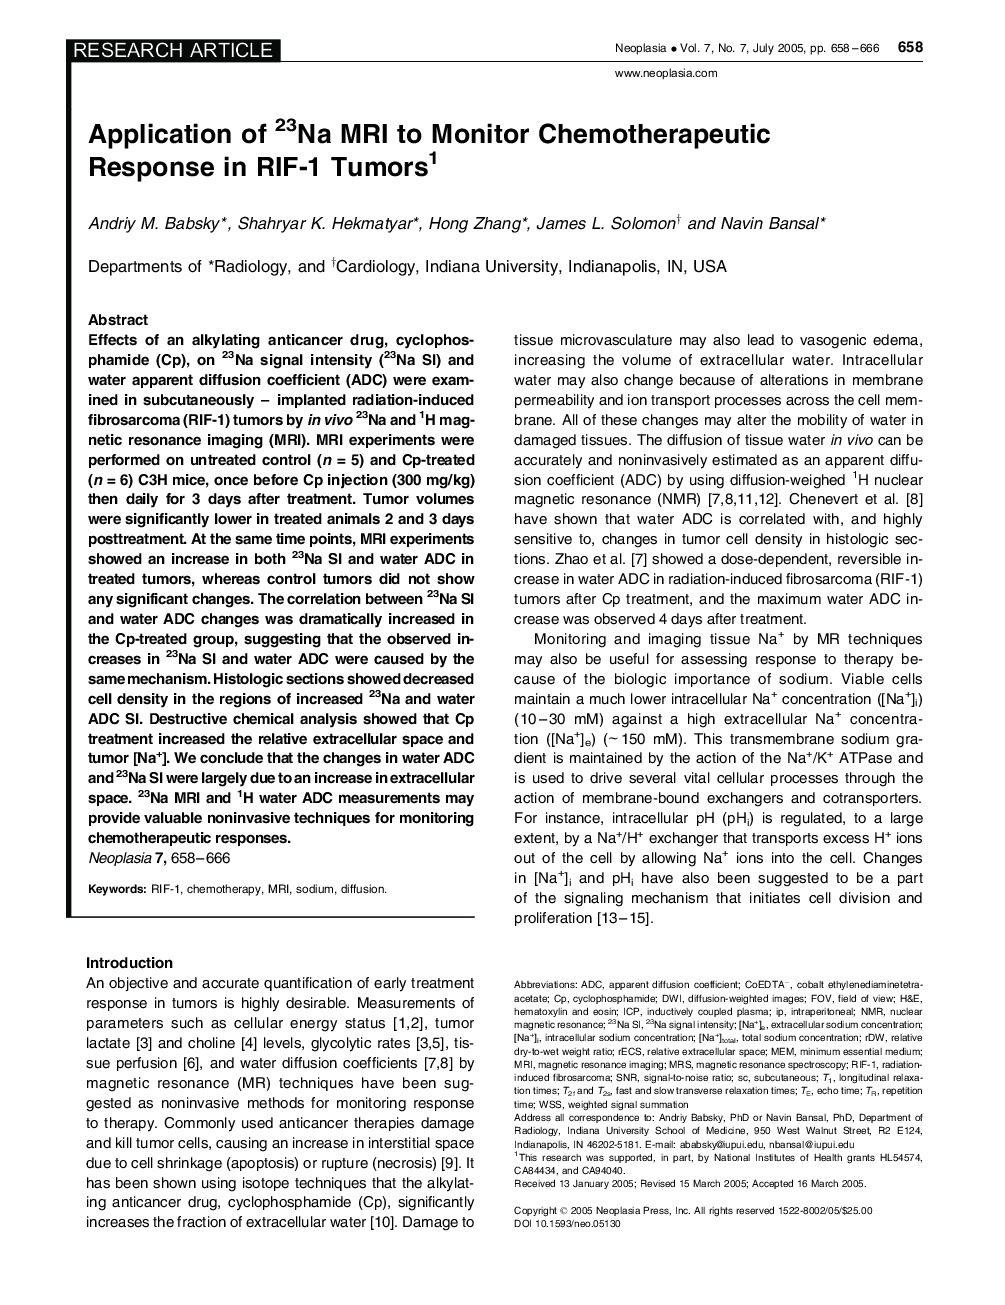 Application of 23Na MRI to Monitor Chemotherapeutic Response in RIF-1 Tumors